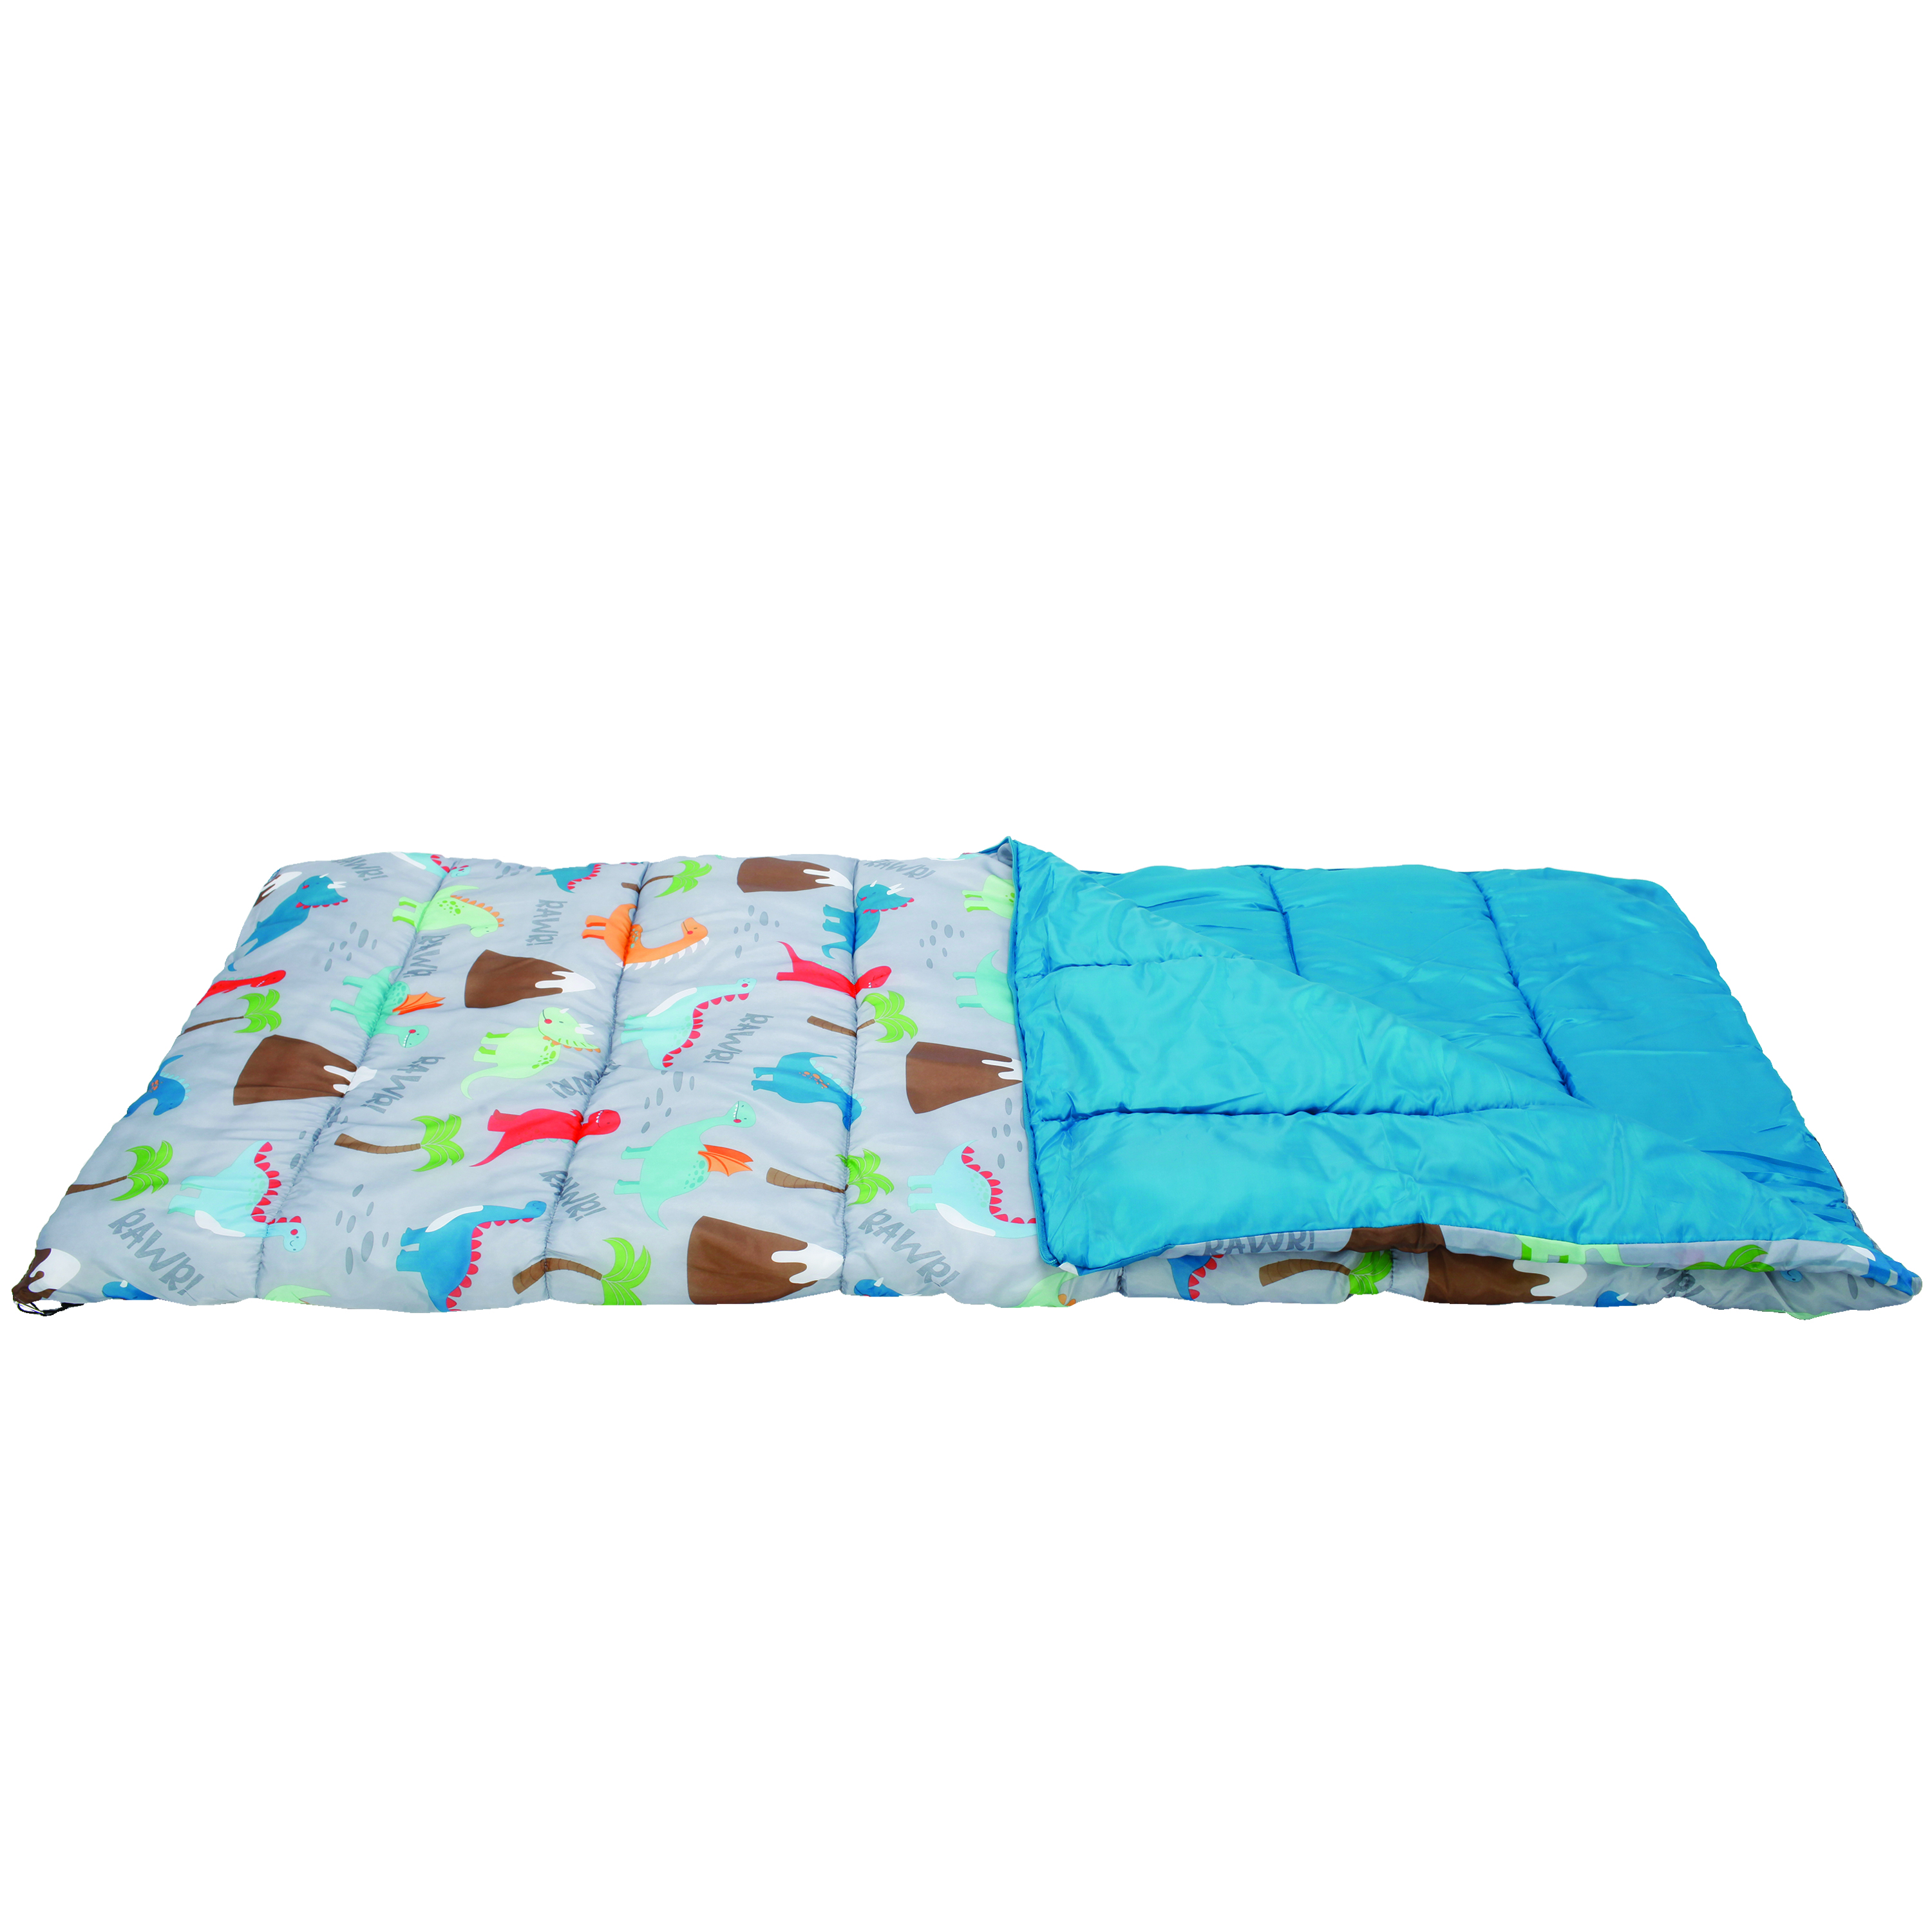 CRCKT Kids Rectangular Sleeping Bag,  °50F Rating, Multi-Color Dino Print - image 1 of 5